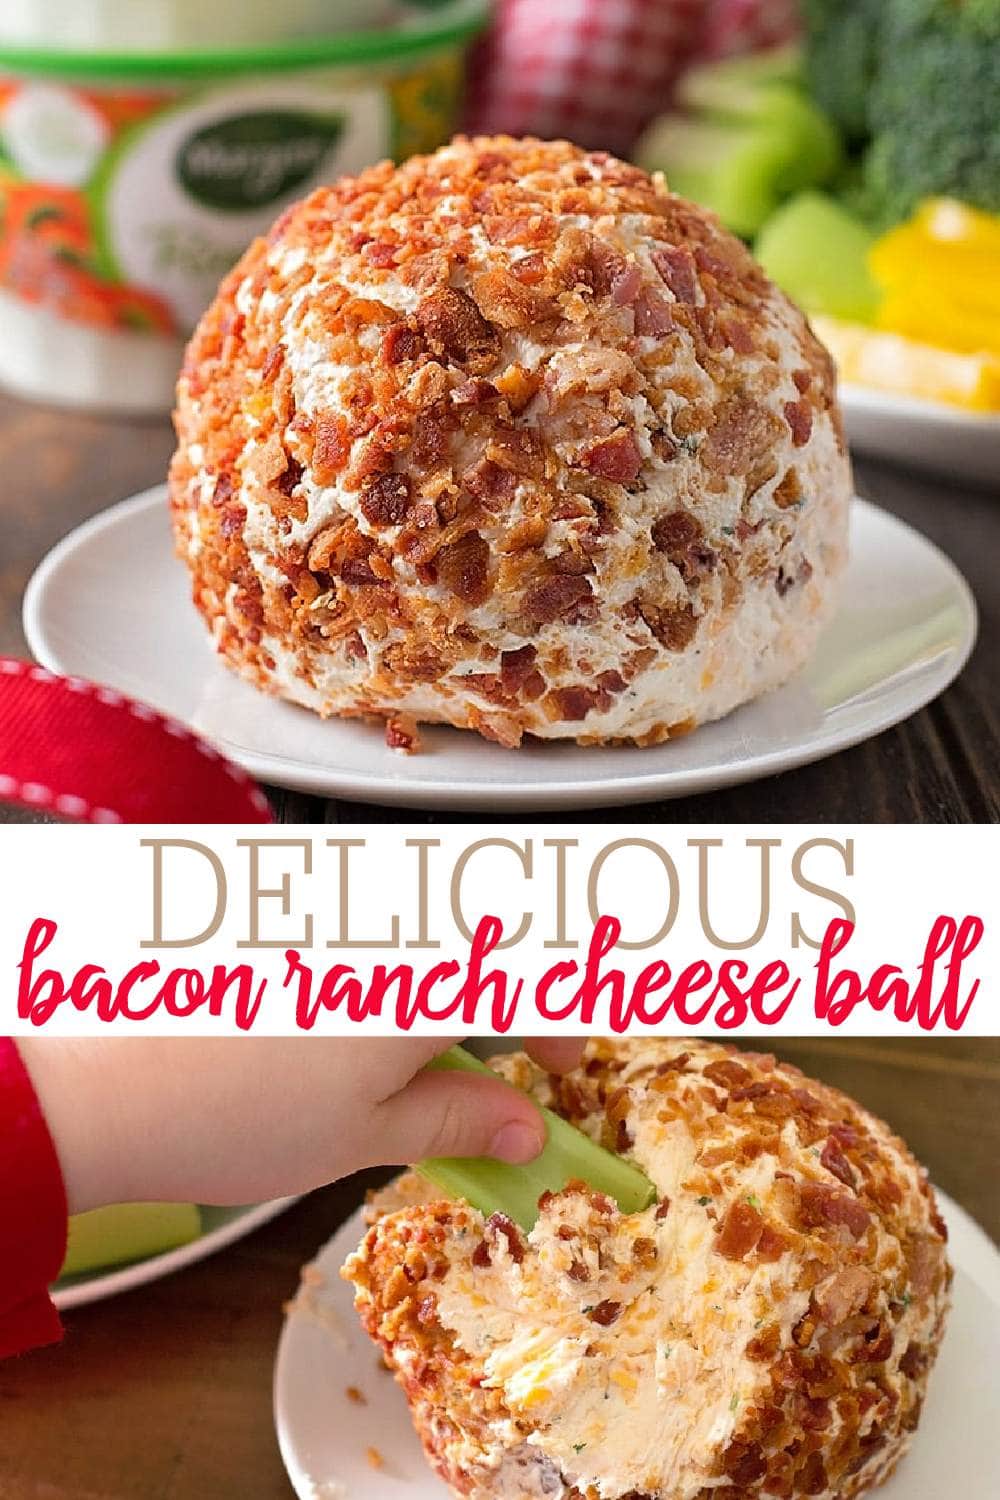 Bacon Ranch Cheese Ball Recipe (+VIDEO) | Lil' Luna